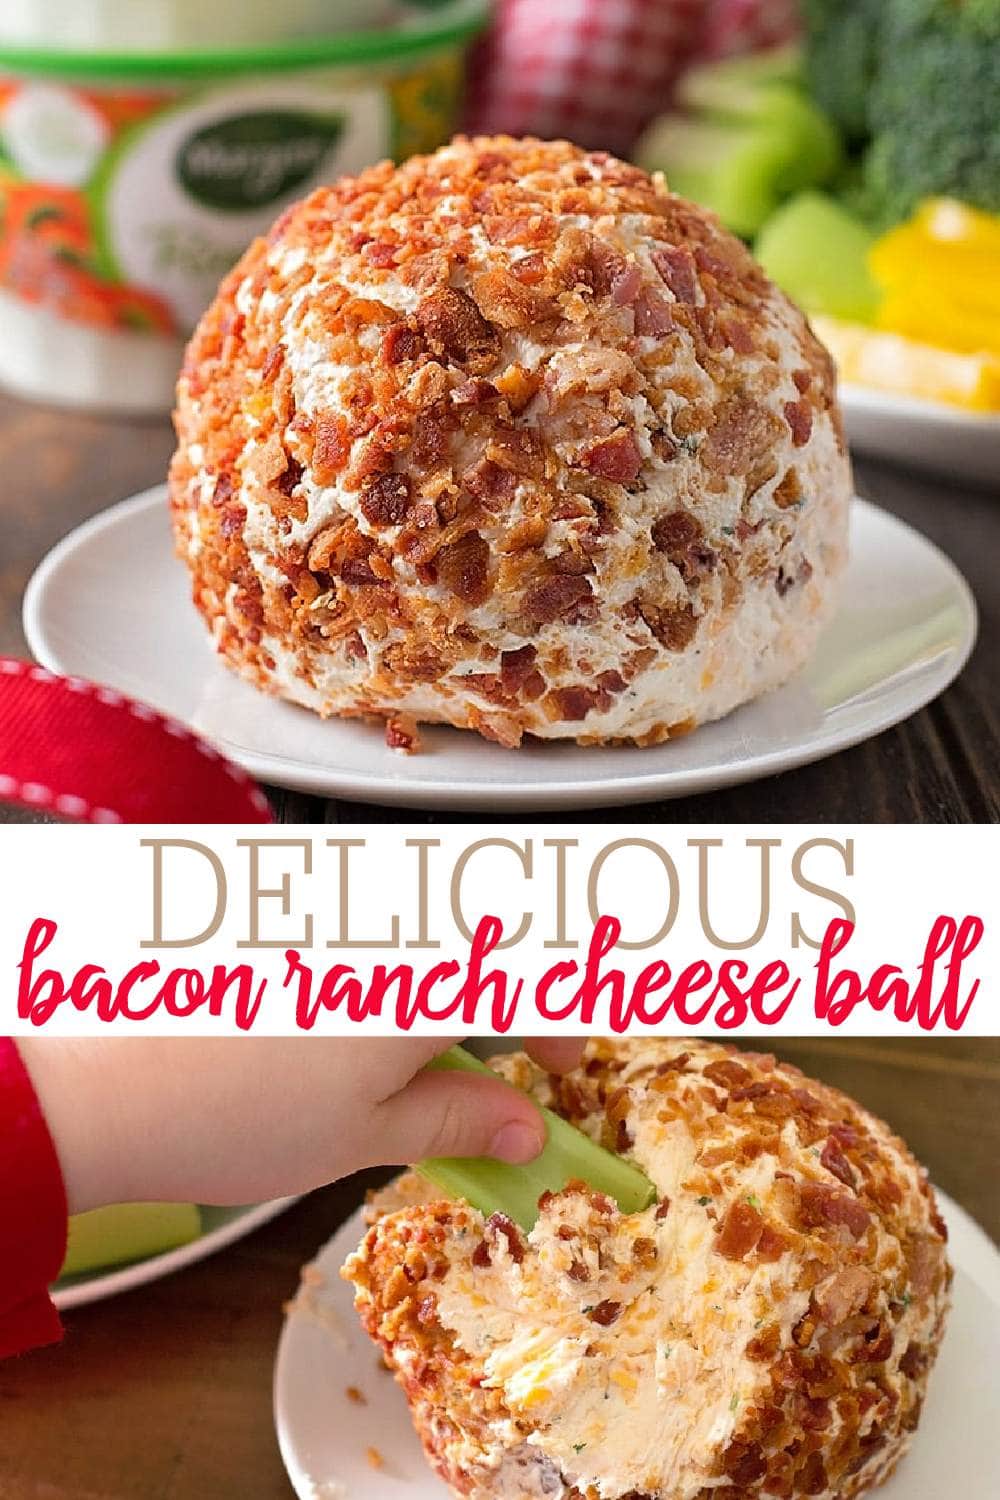 Bacon Ranch Cheese Ball Recipe (+VIDEO) | Lil' Luna